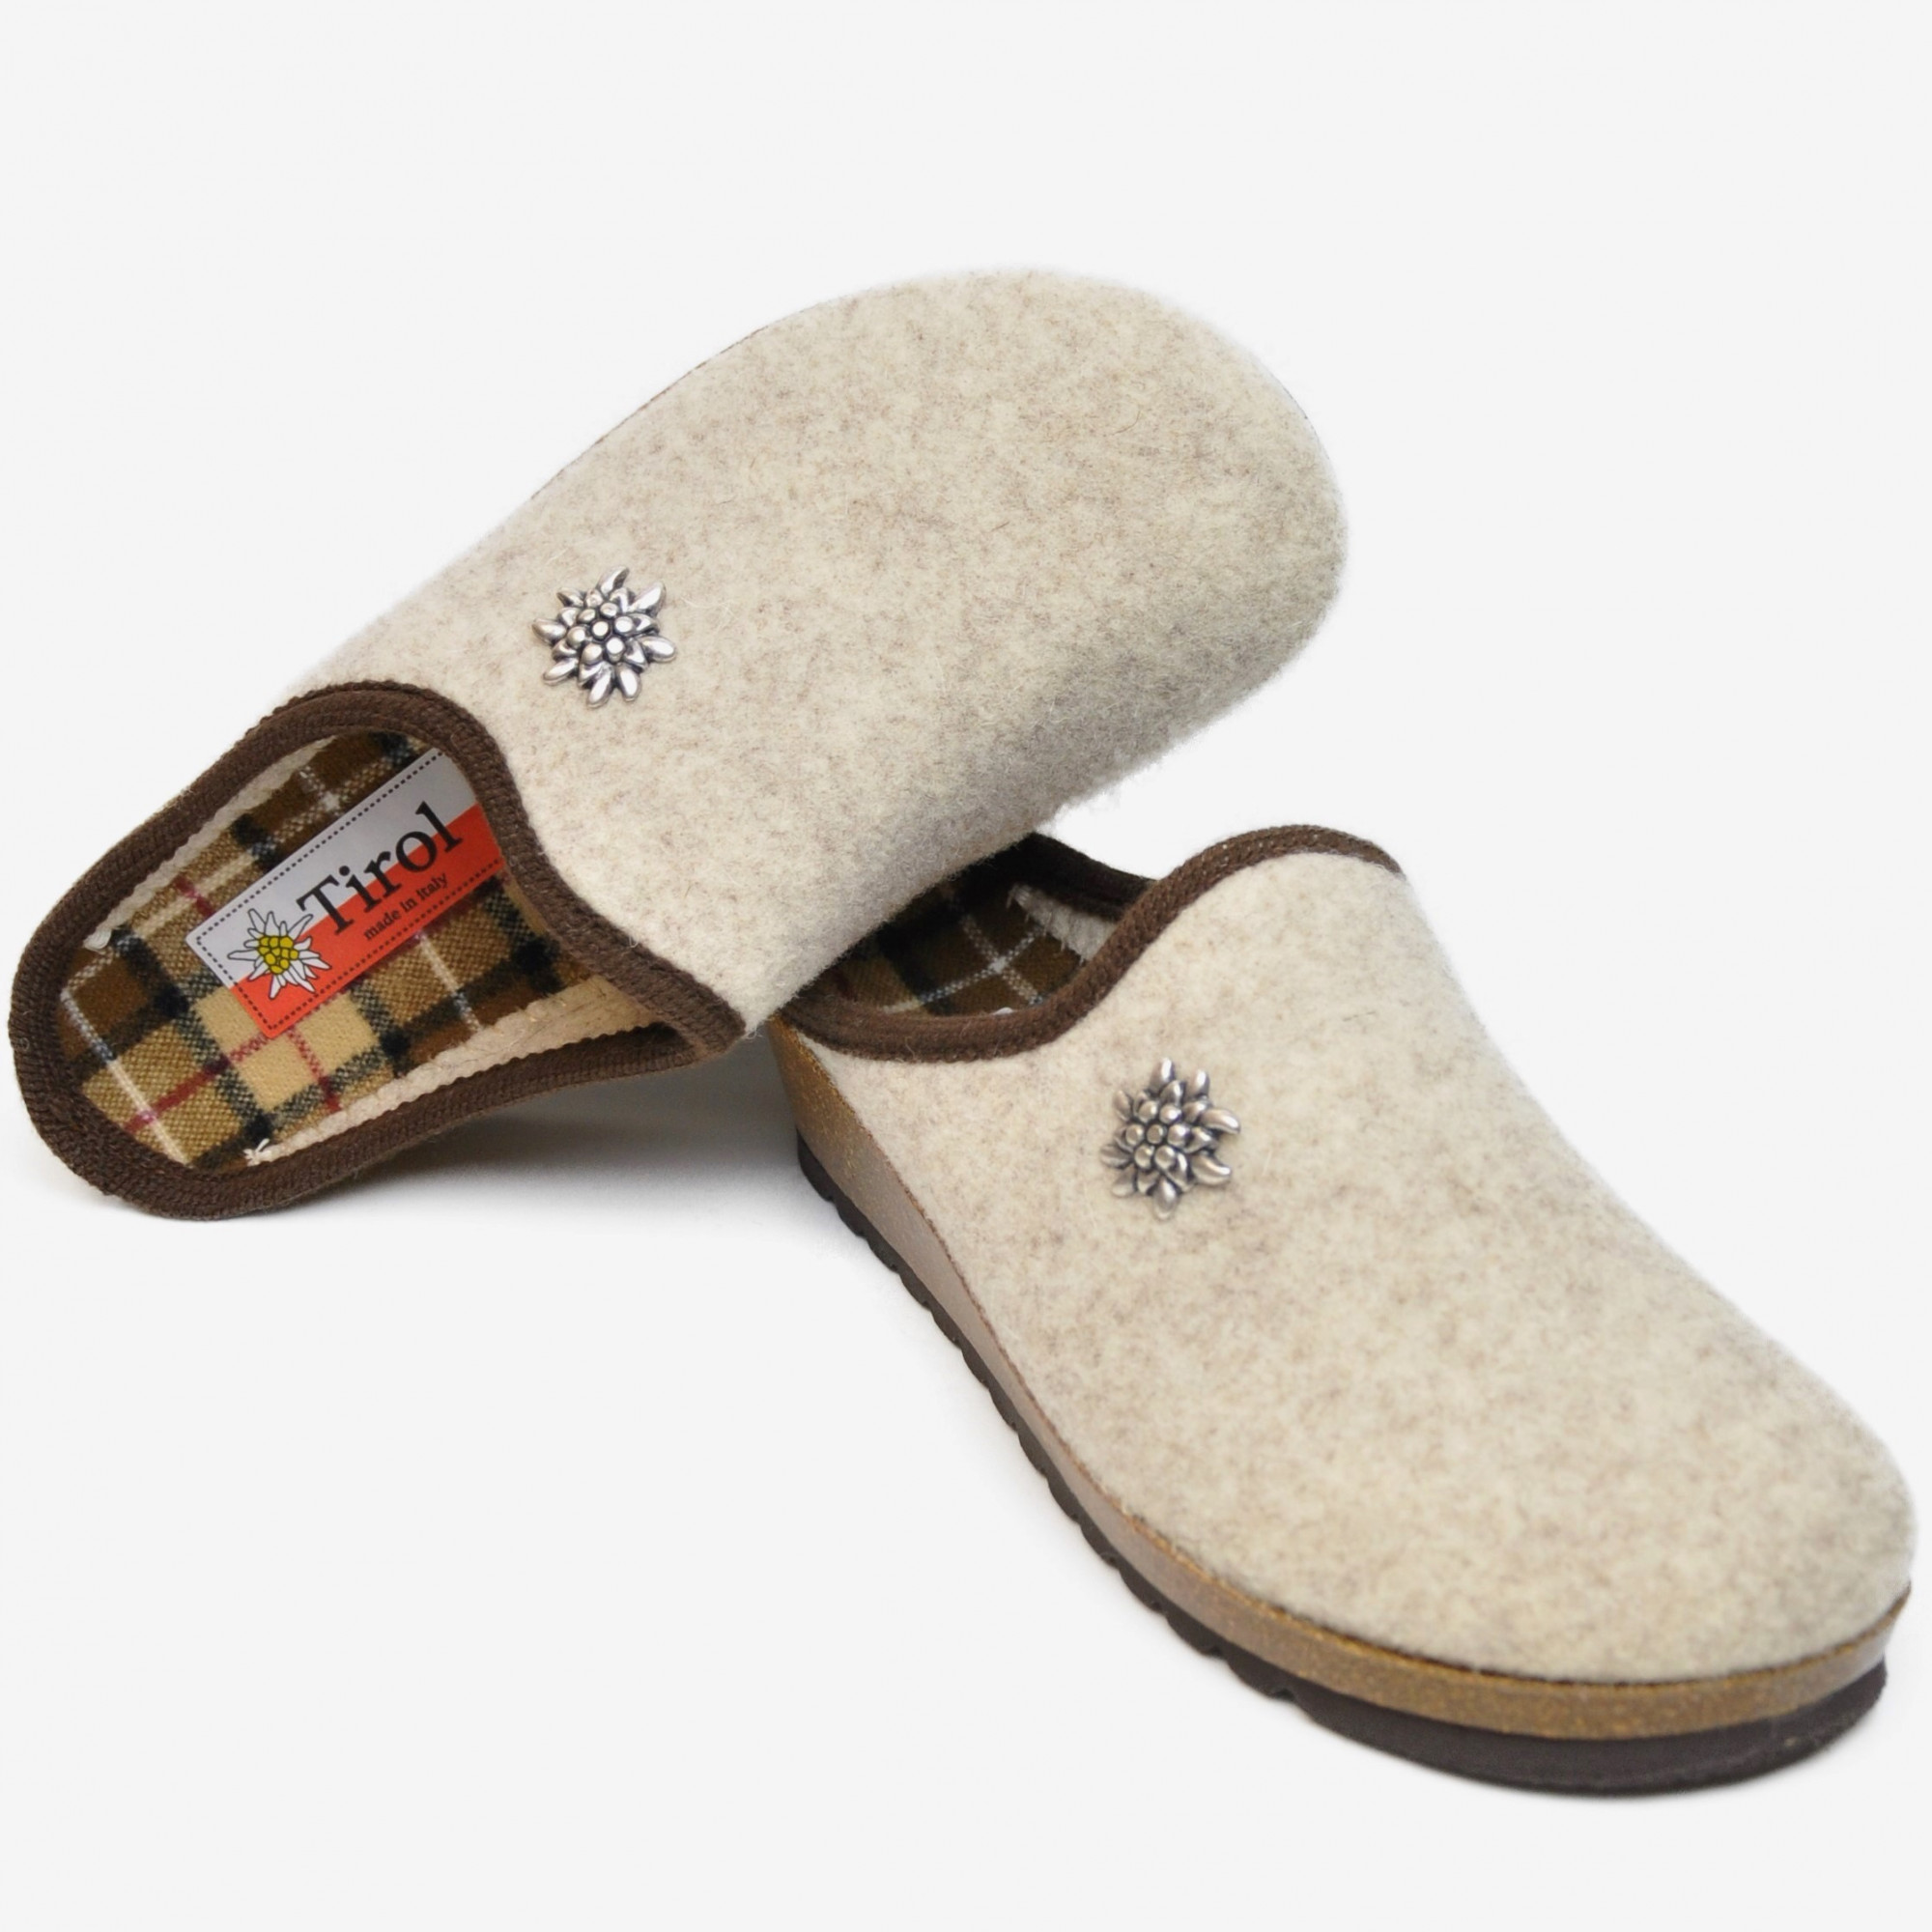 european house slippers